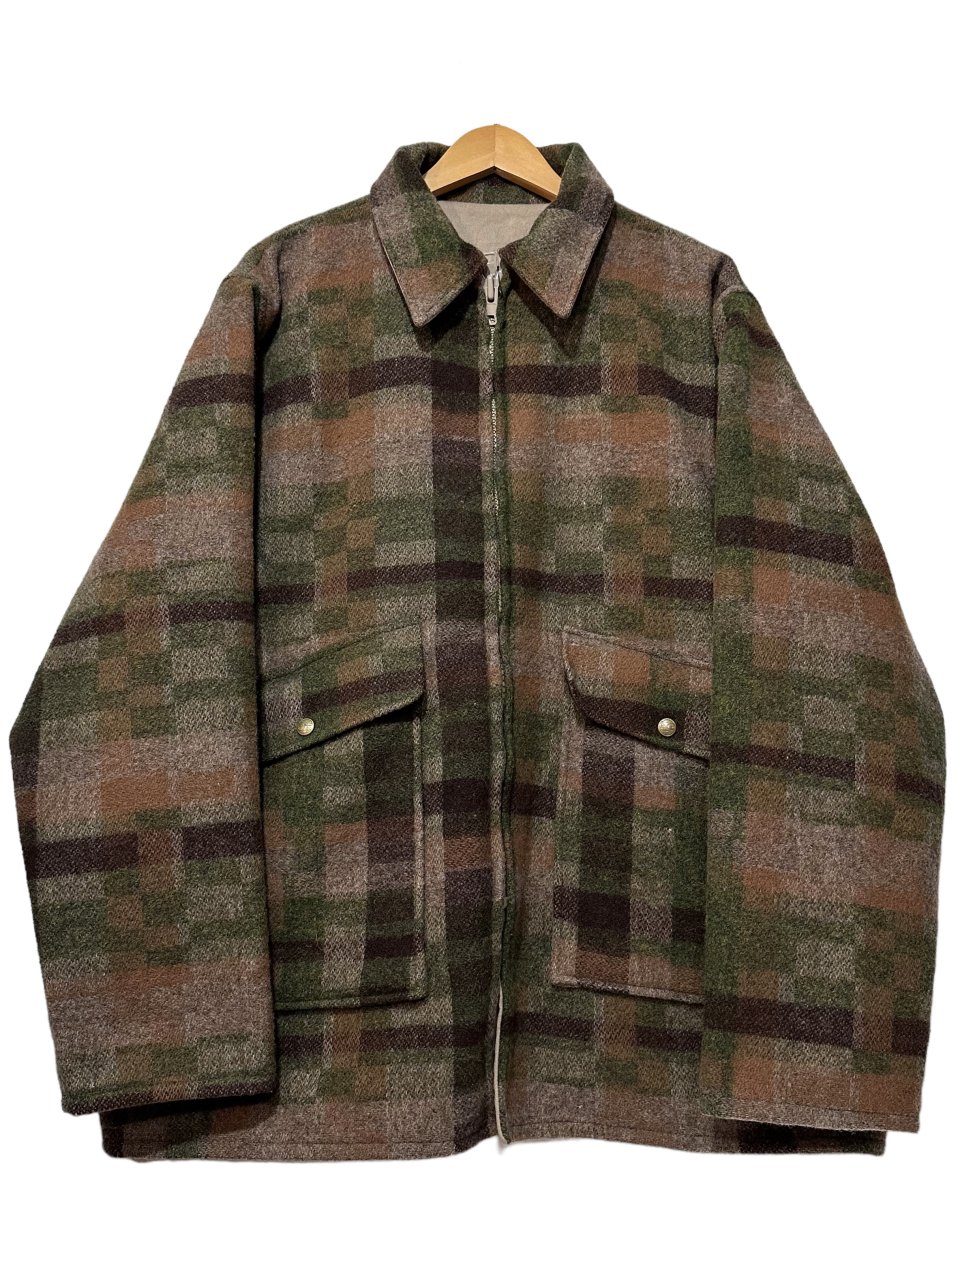 USA製 80s L.L.Bean Reversible Wool Hunting Jacket オリーブ カーキ